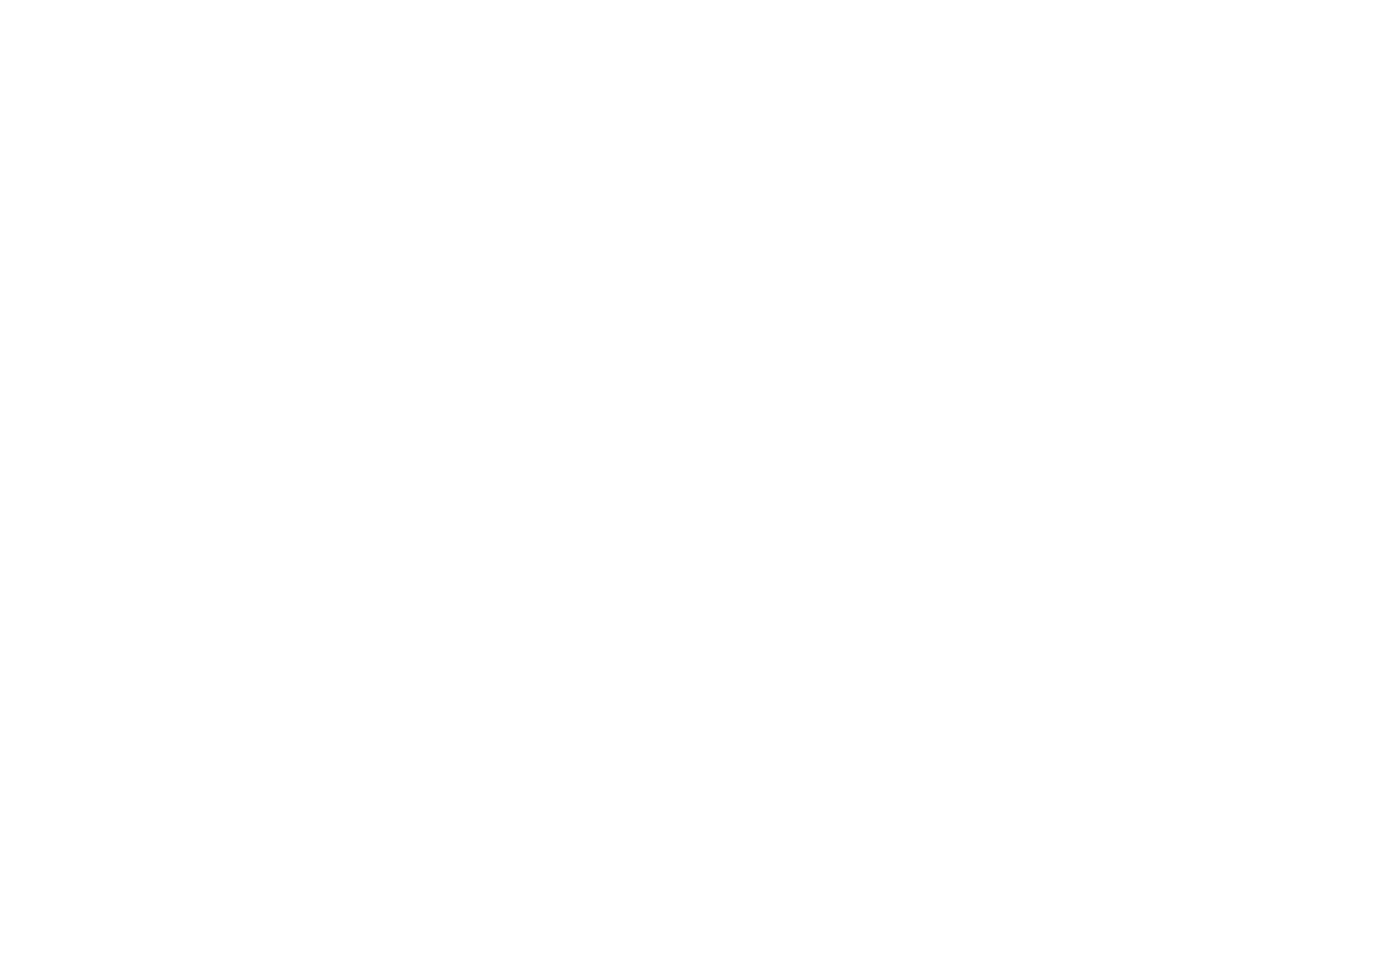 Discontinued Decals